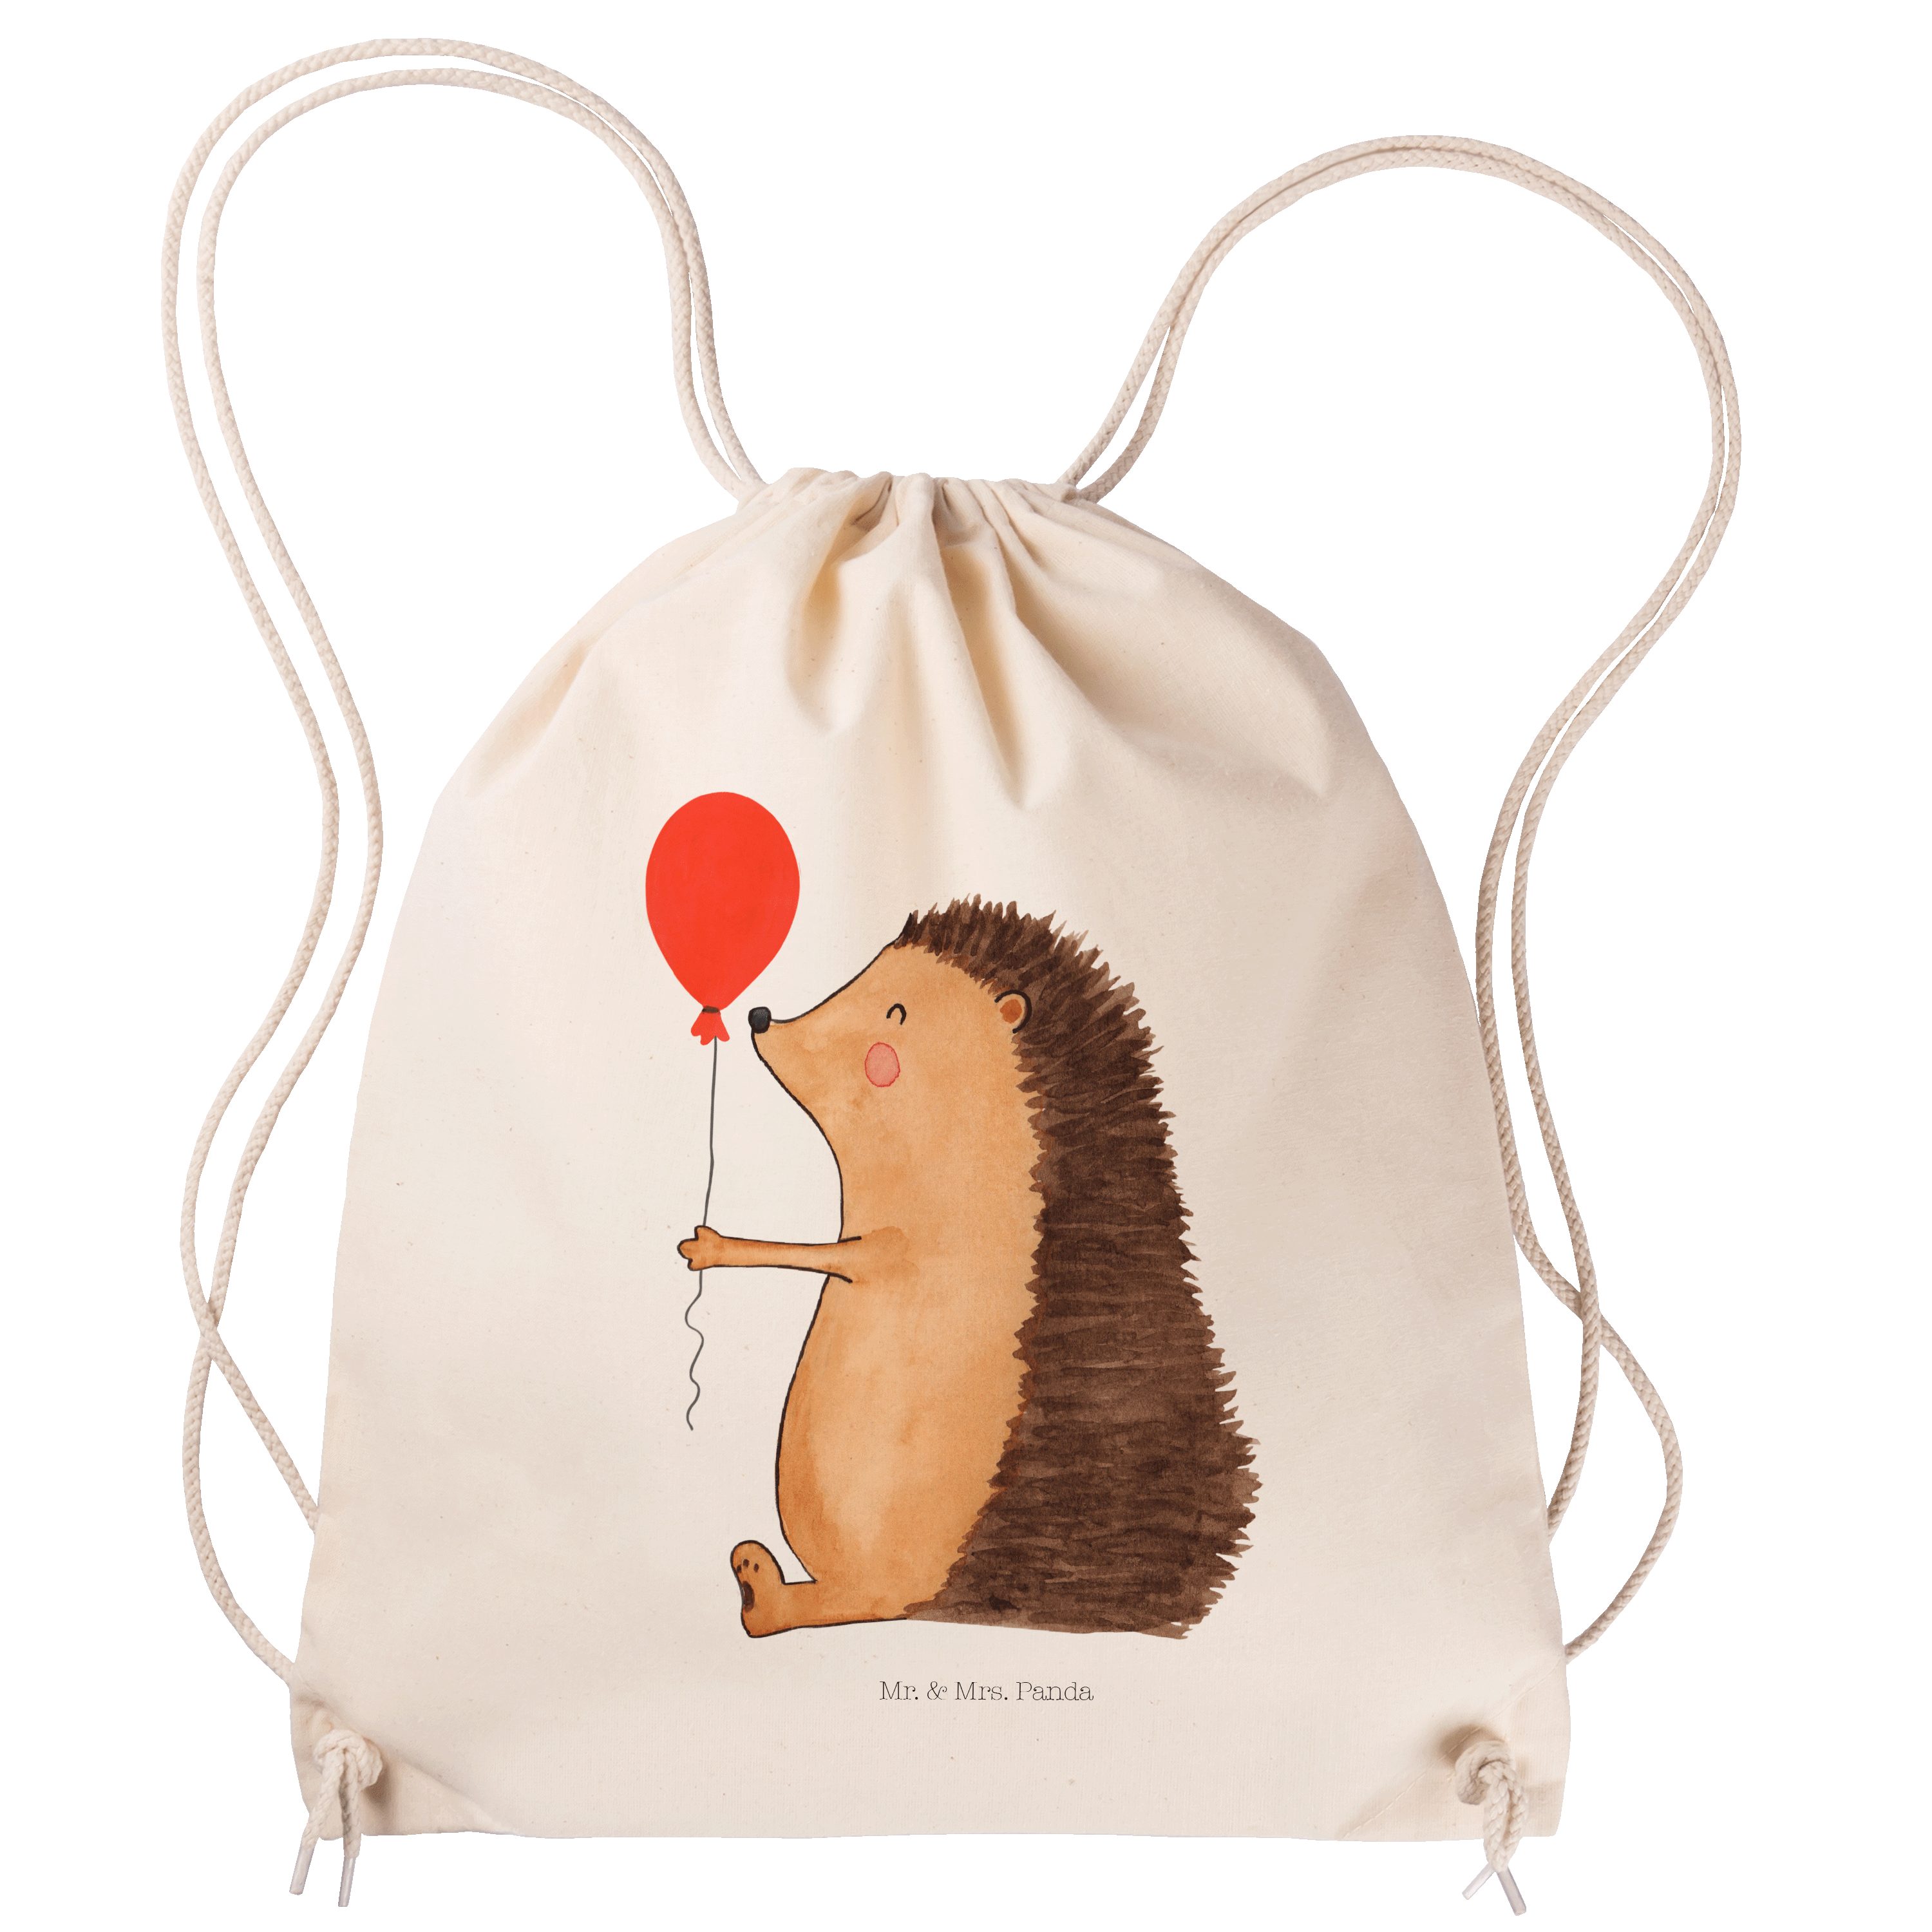 Mr. & Mrs. Panda Sporttasche Geschenk, (1-tlg) Sportbeutel mit Kinder, - Tur Transparent Luftballon Igel 